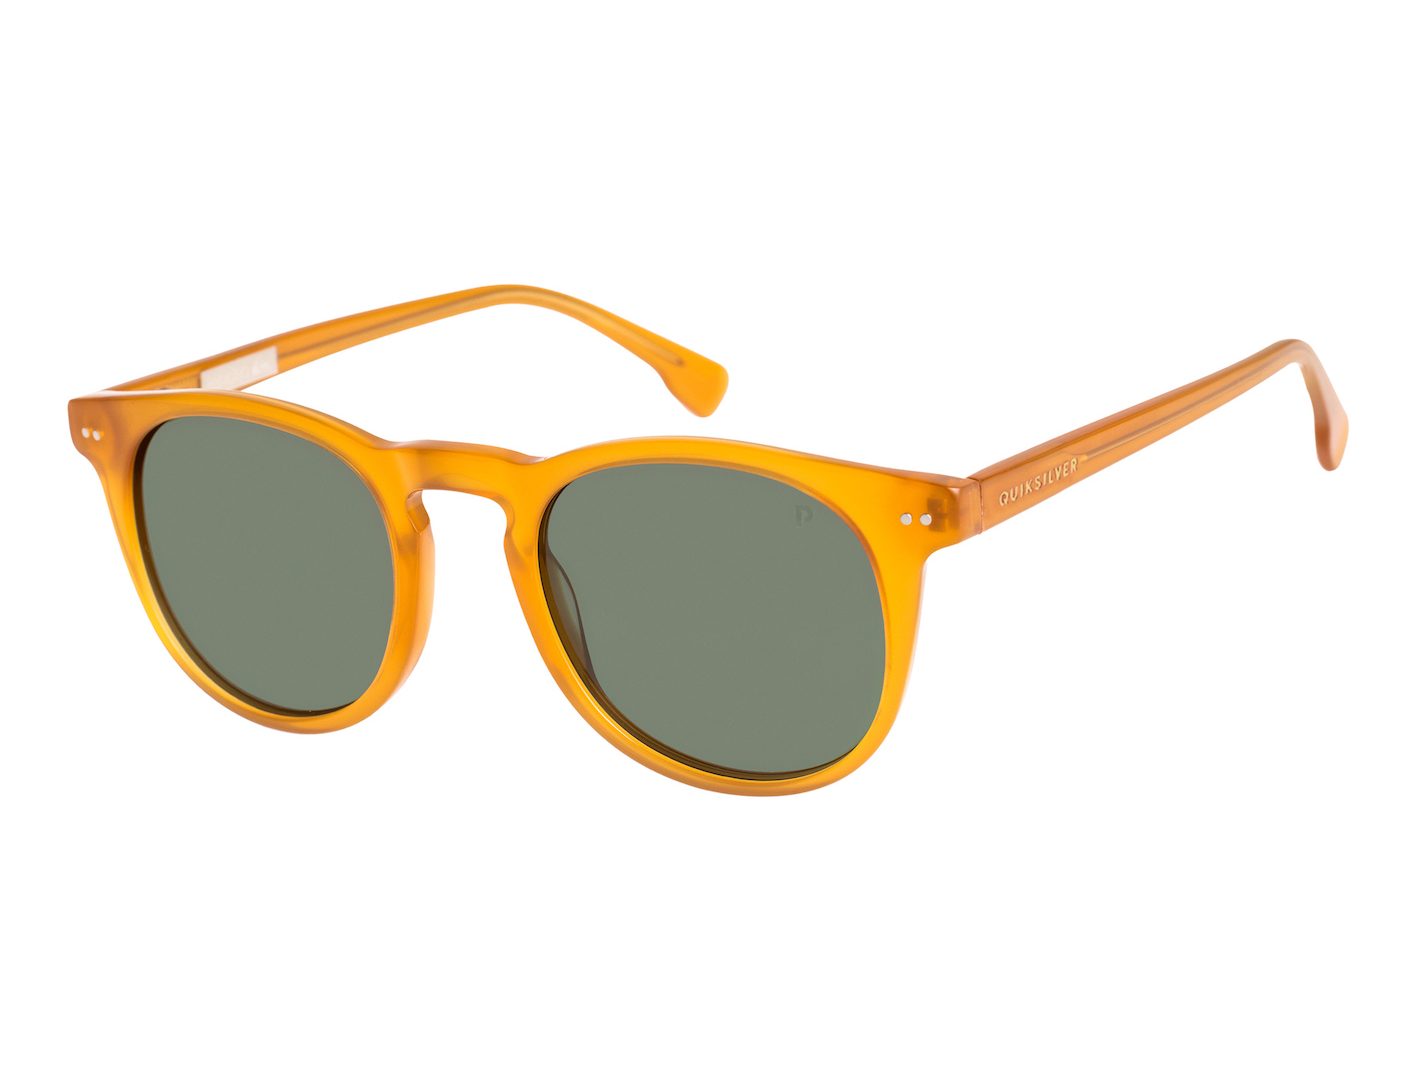 Quiksilver & Roxy SS20 Sunglasses